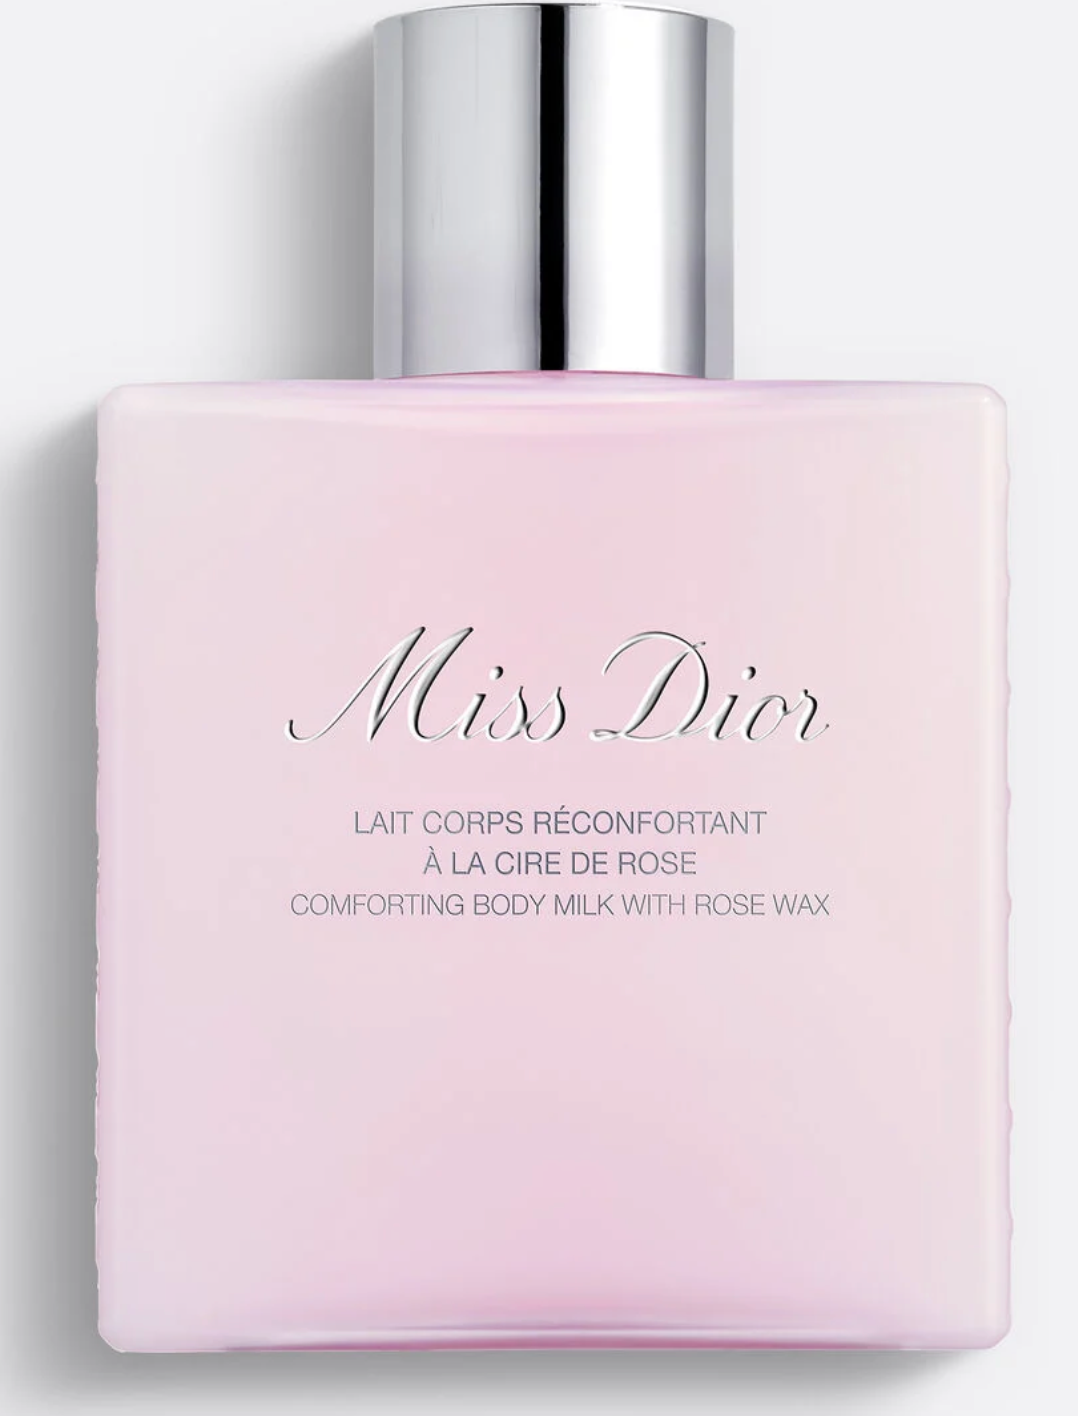 Miss Dior Comforting Body Milk